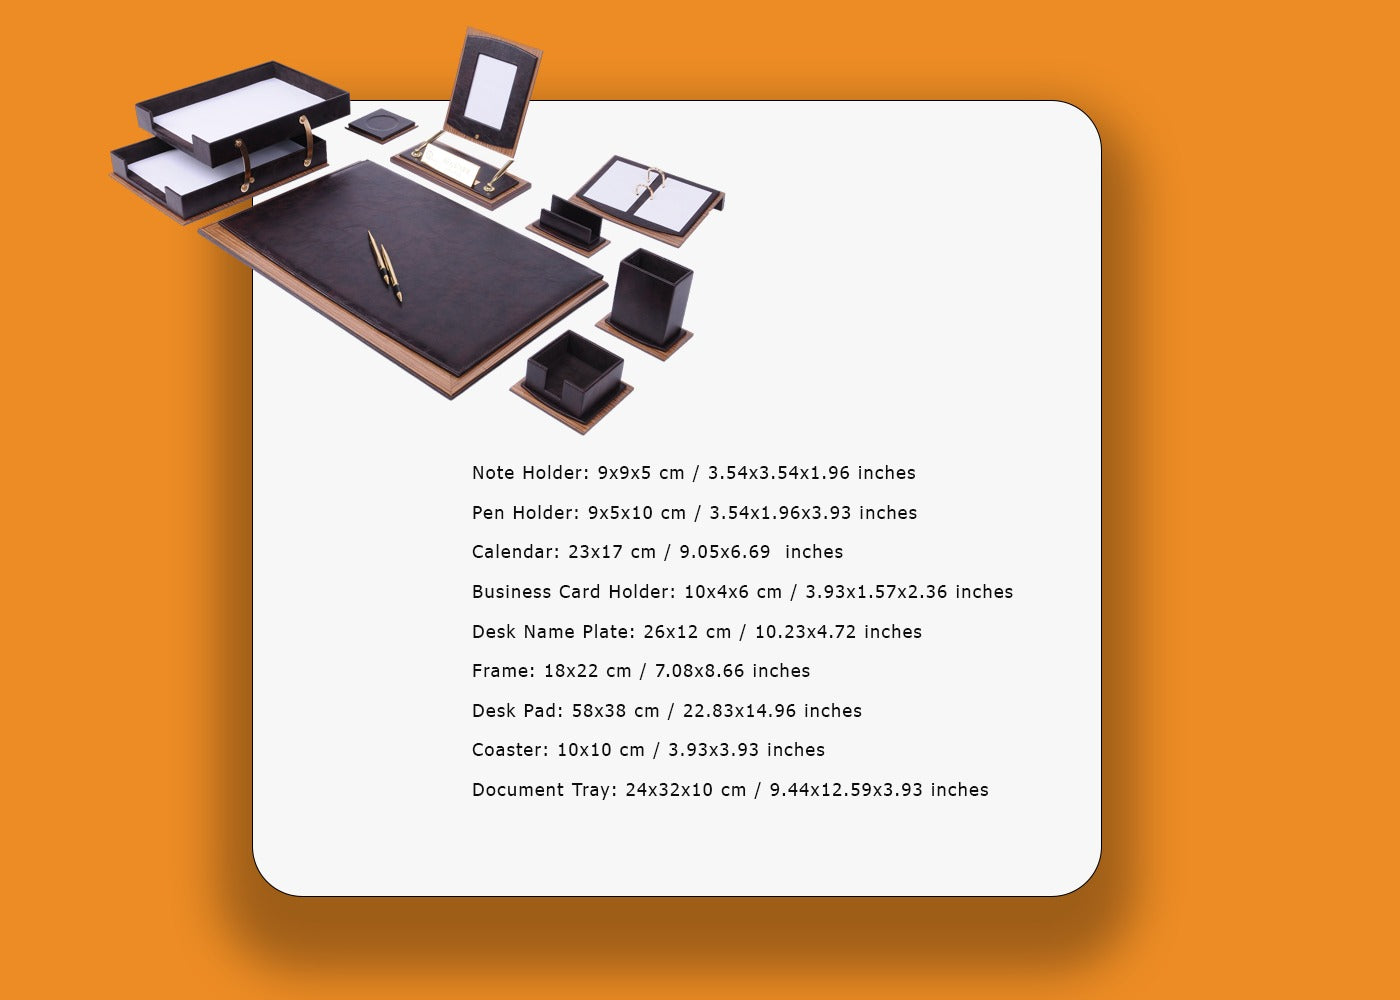 MOOG Star Leather Desk Set -Walnut Wood Combination - Brown -10 PCS